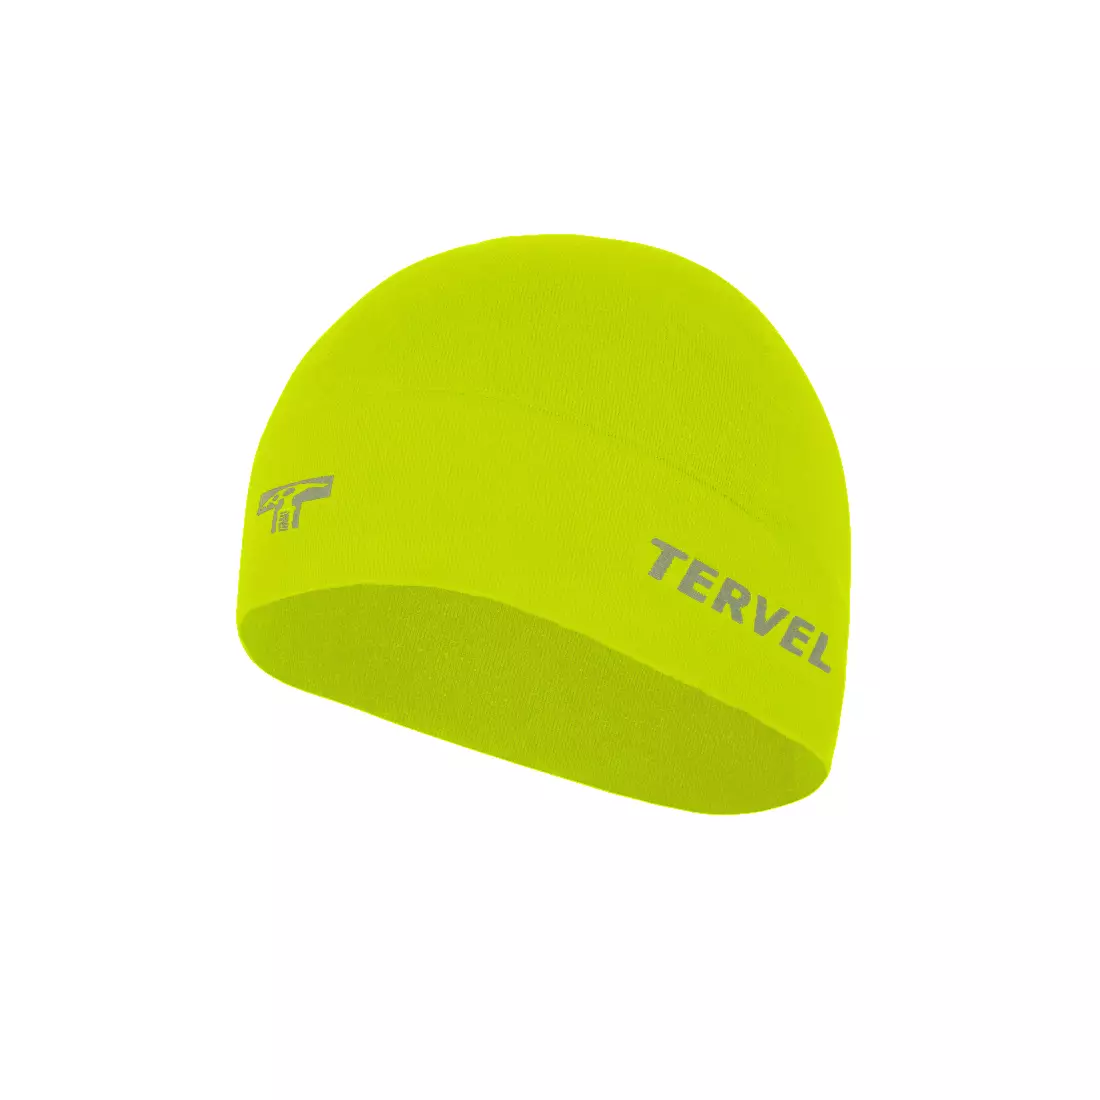 TERVEL 7001 - COMFORTLINE - training cap, color: Fluor, size: Universal